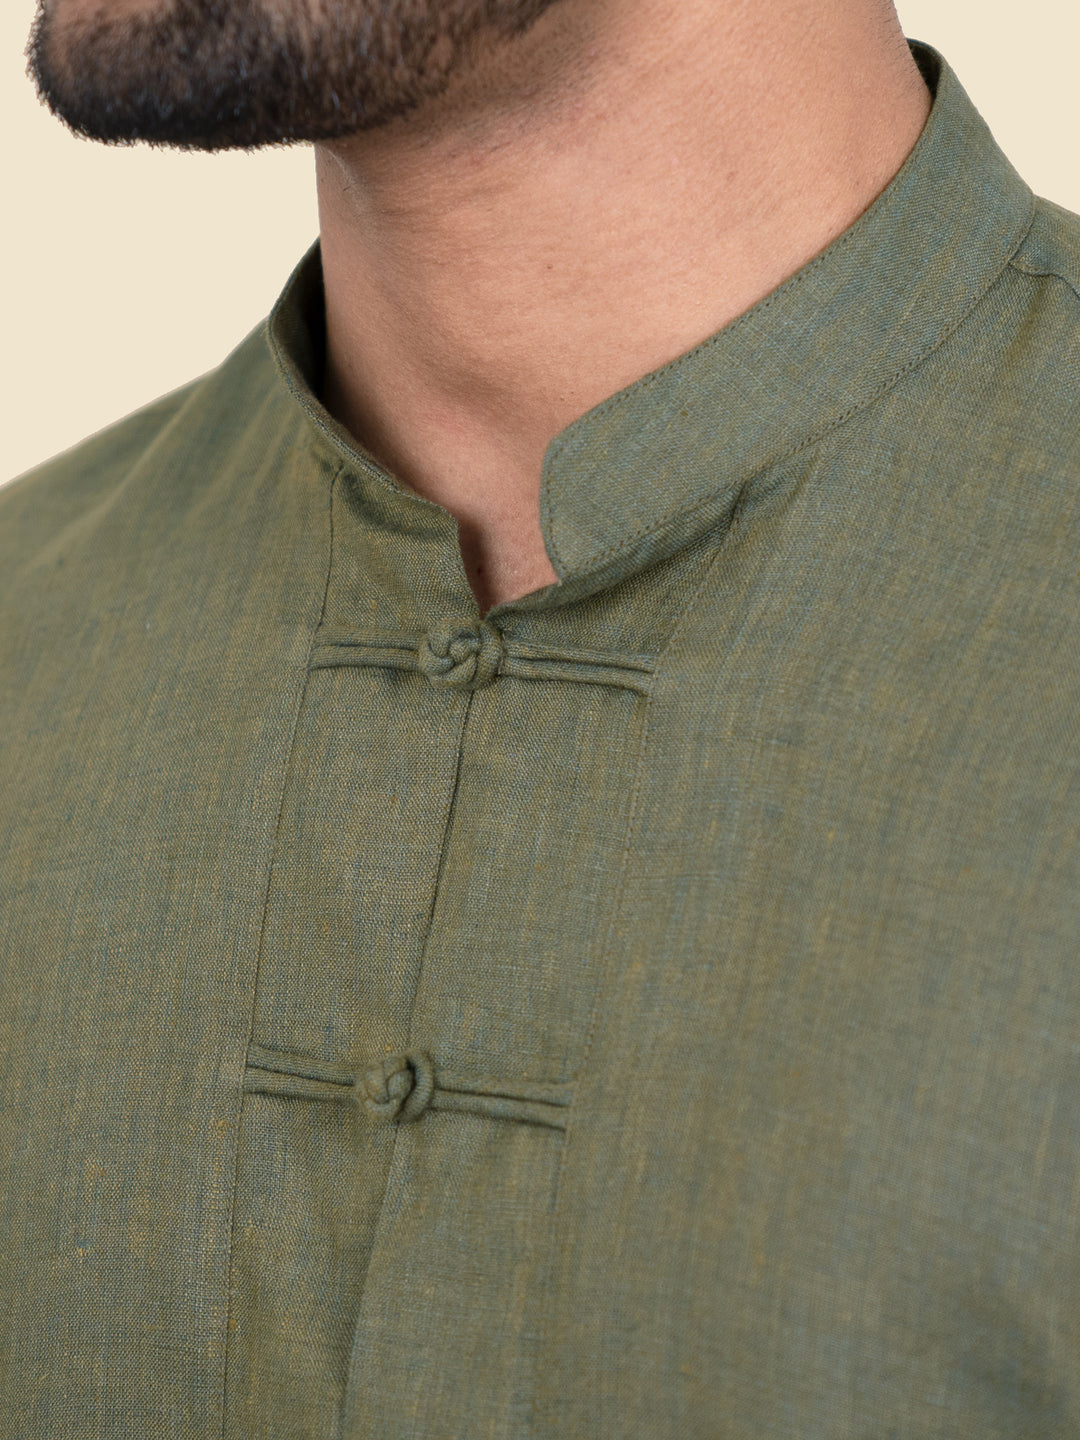 Marco - Pure Linen Full Sleeve Shirt - Seaweed Green